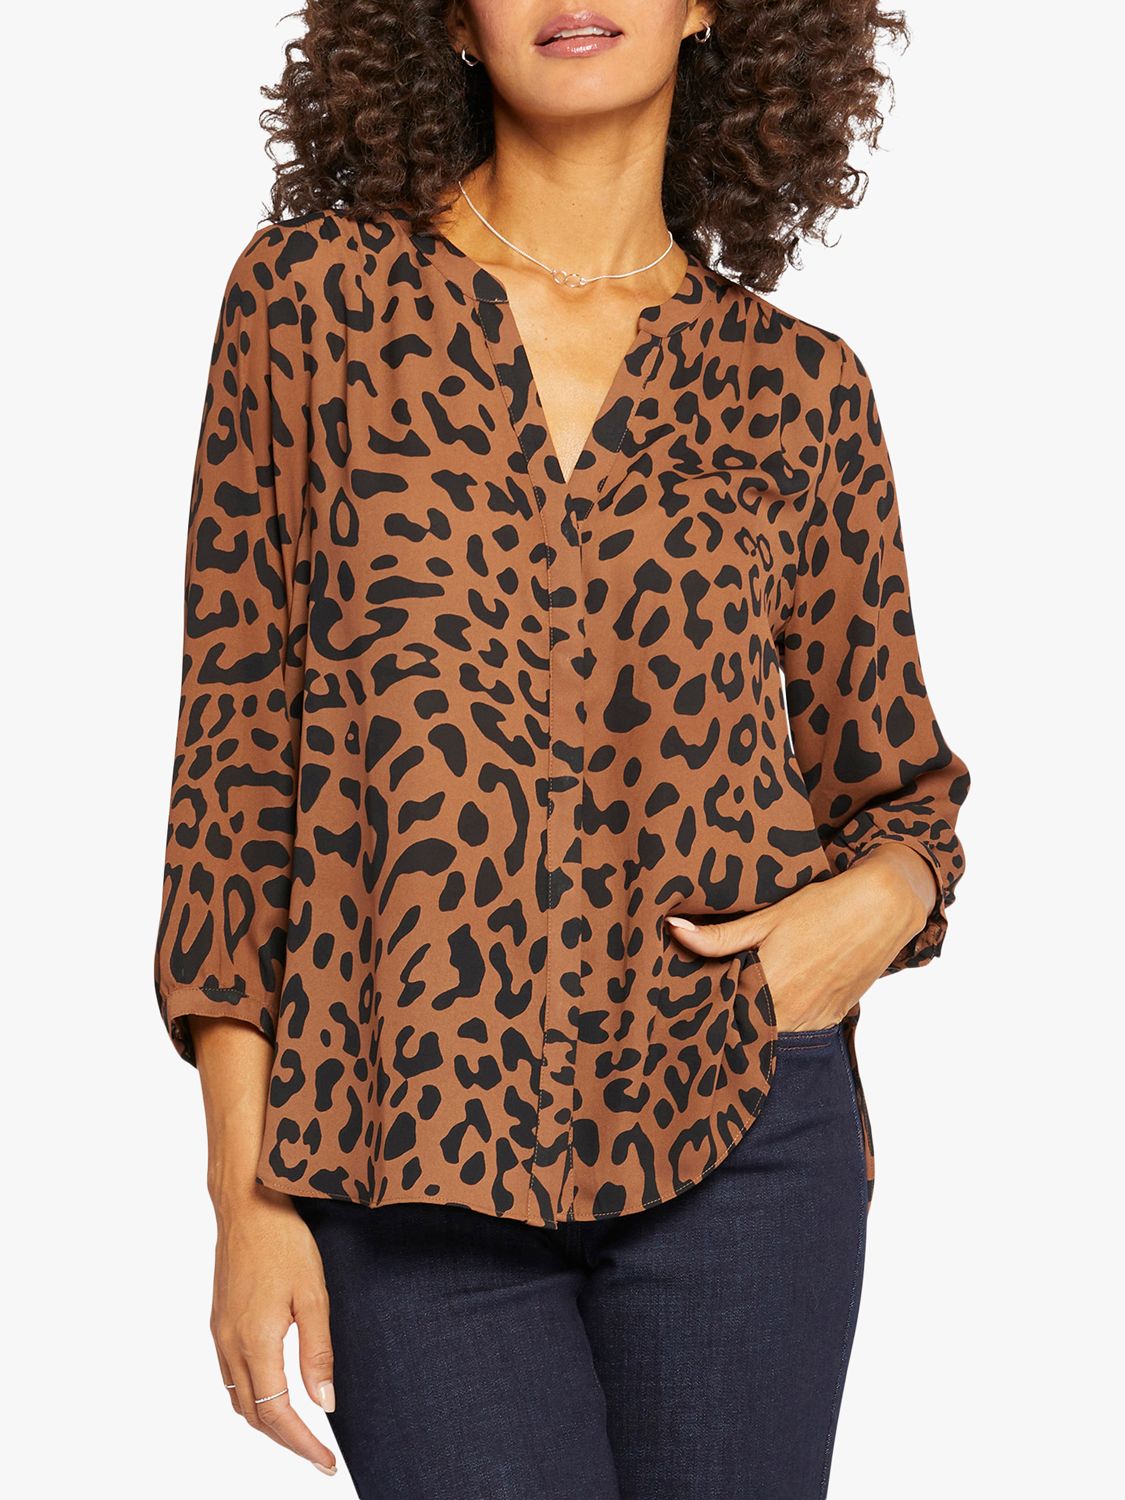 Леопардовая блузка с защипами NYDJ, афина